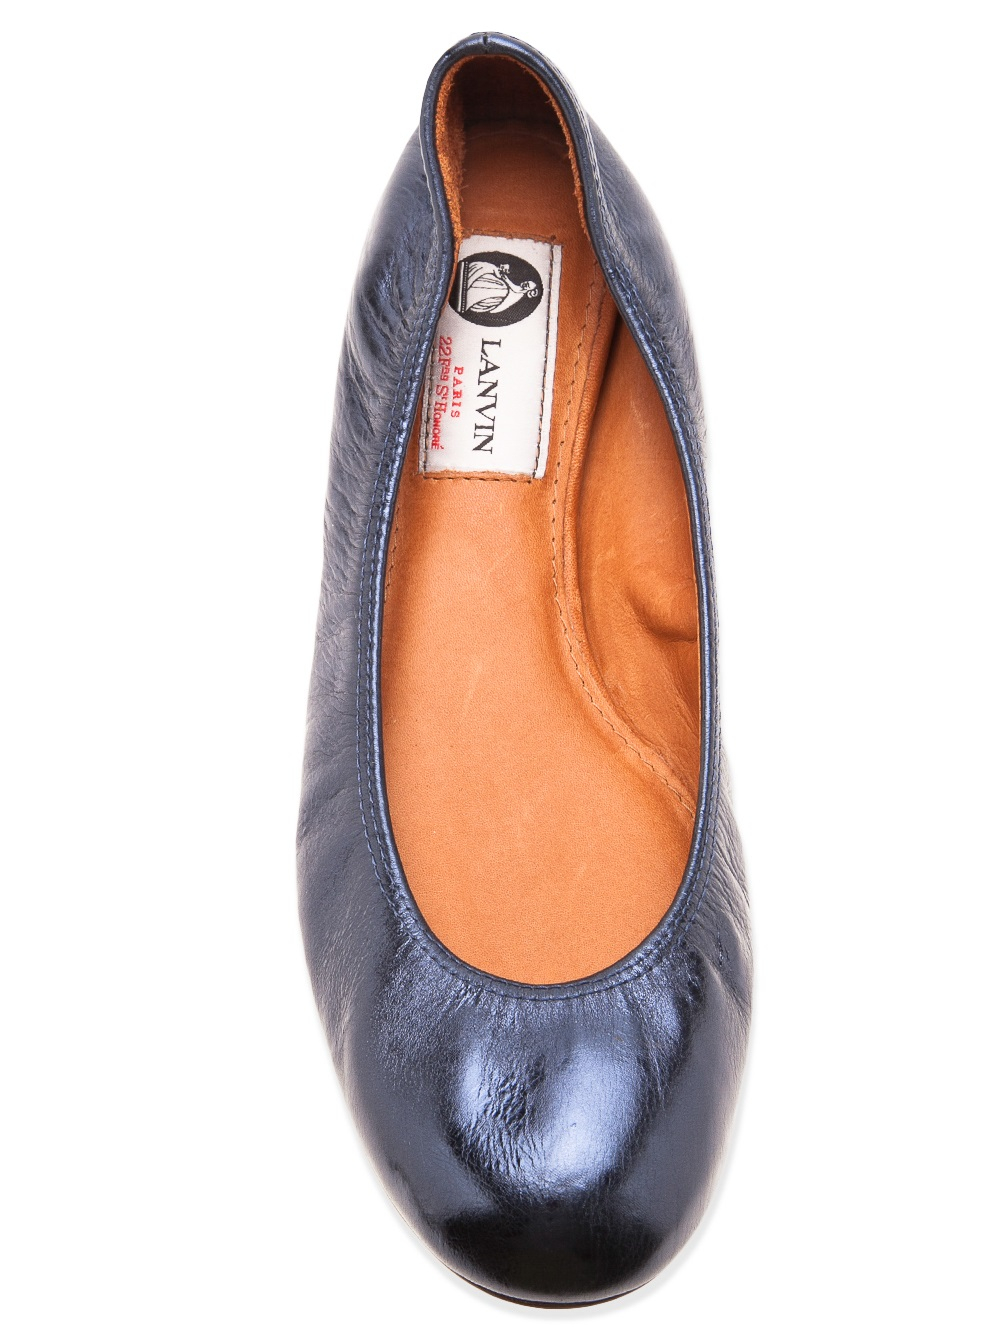 Lyst - Lanvin Shiny Ballerina Shoes in Blue